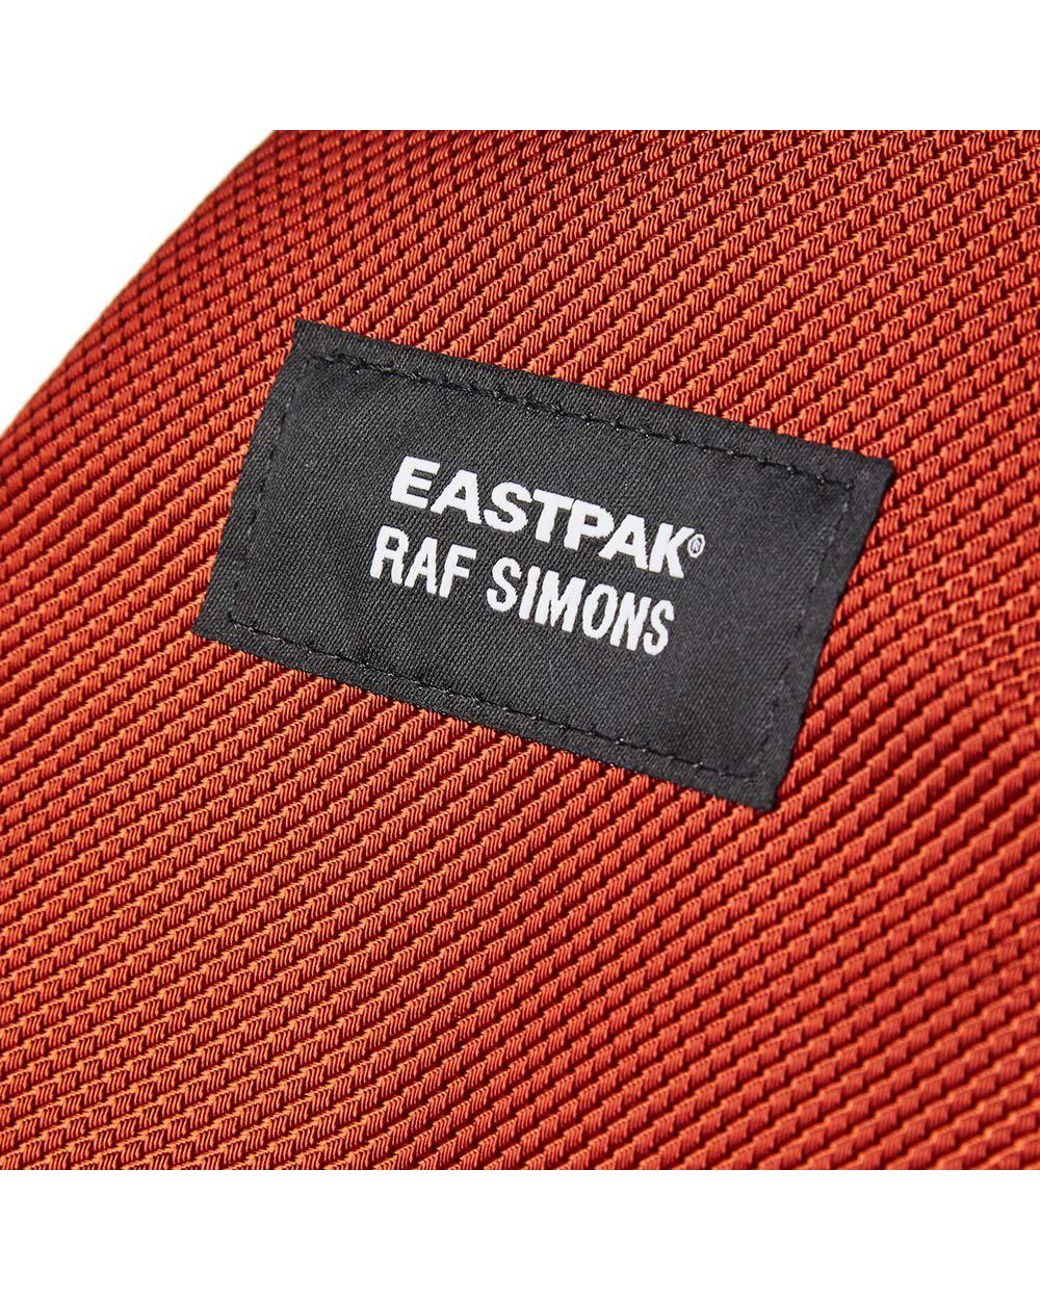 raf simons x eastpak sling bag, Off 70%